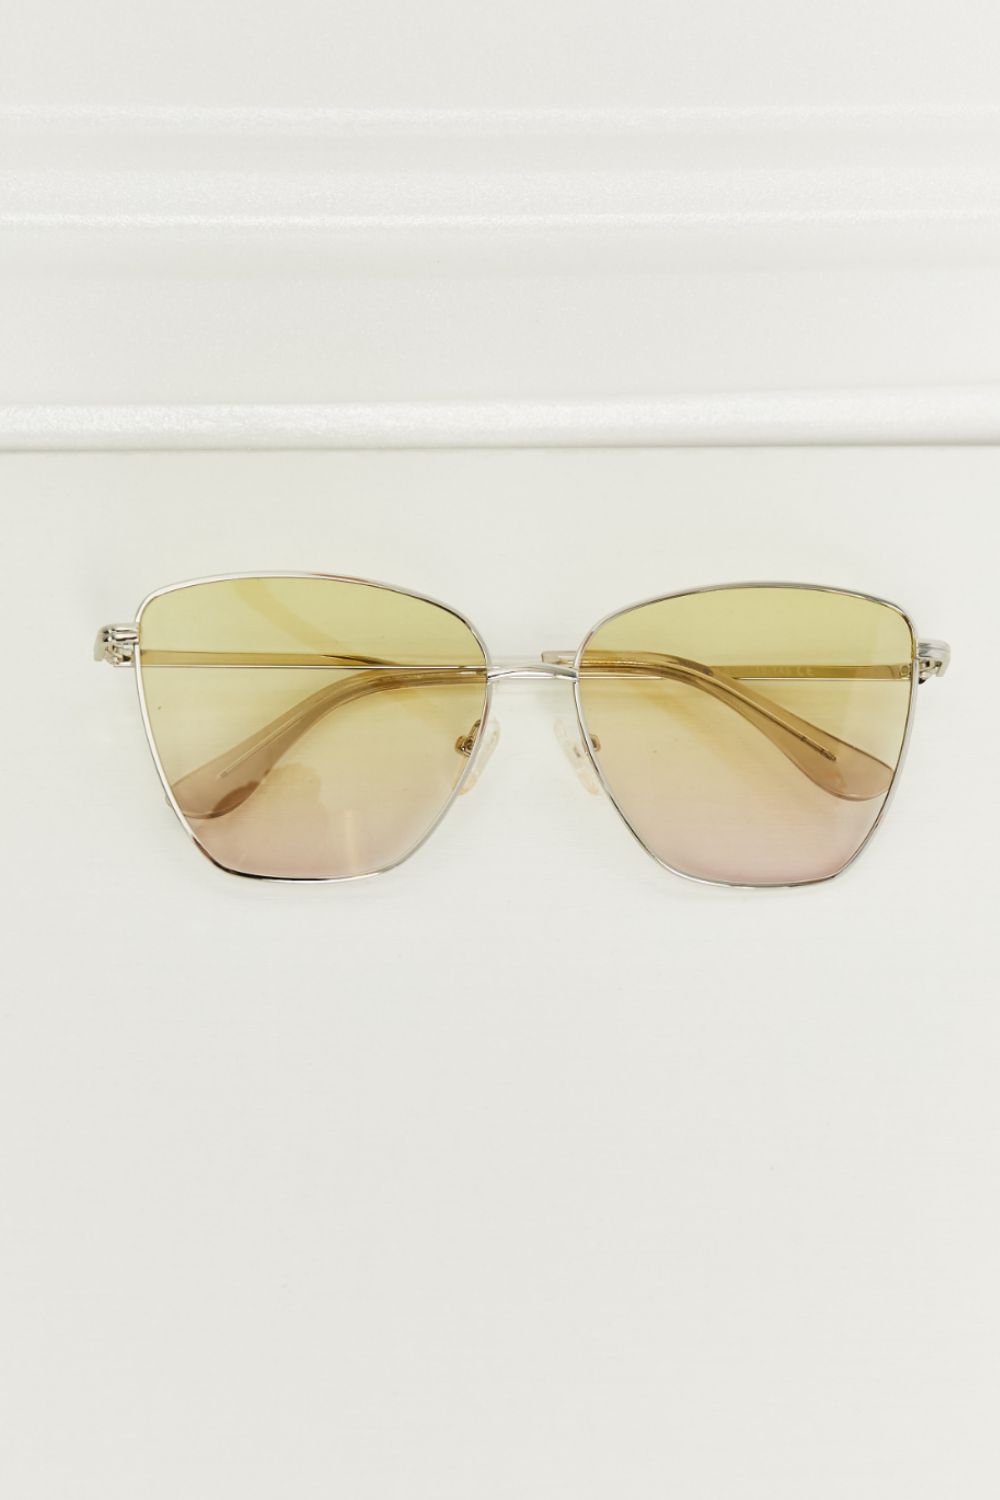 Uylee’s Boutique Metal Frame Full Rim Sunglasses